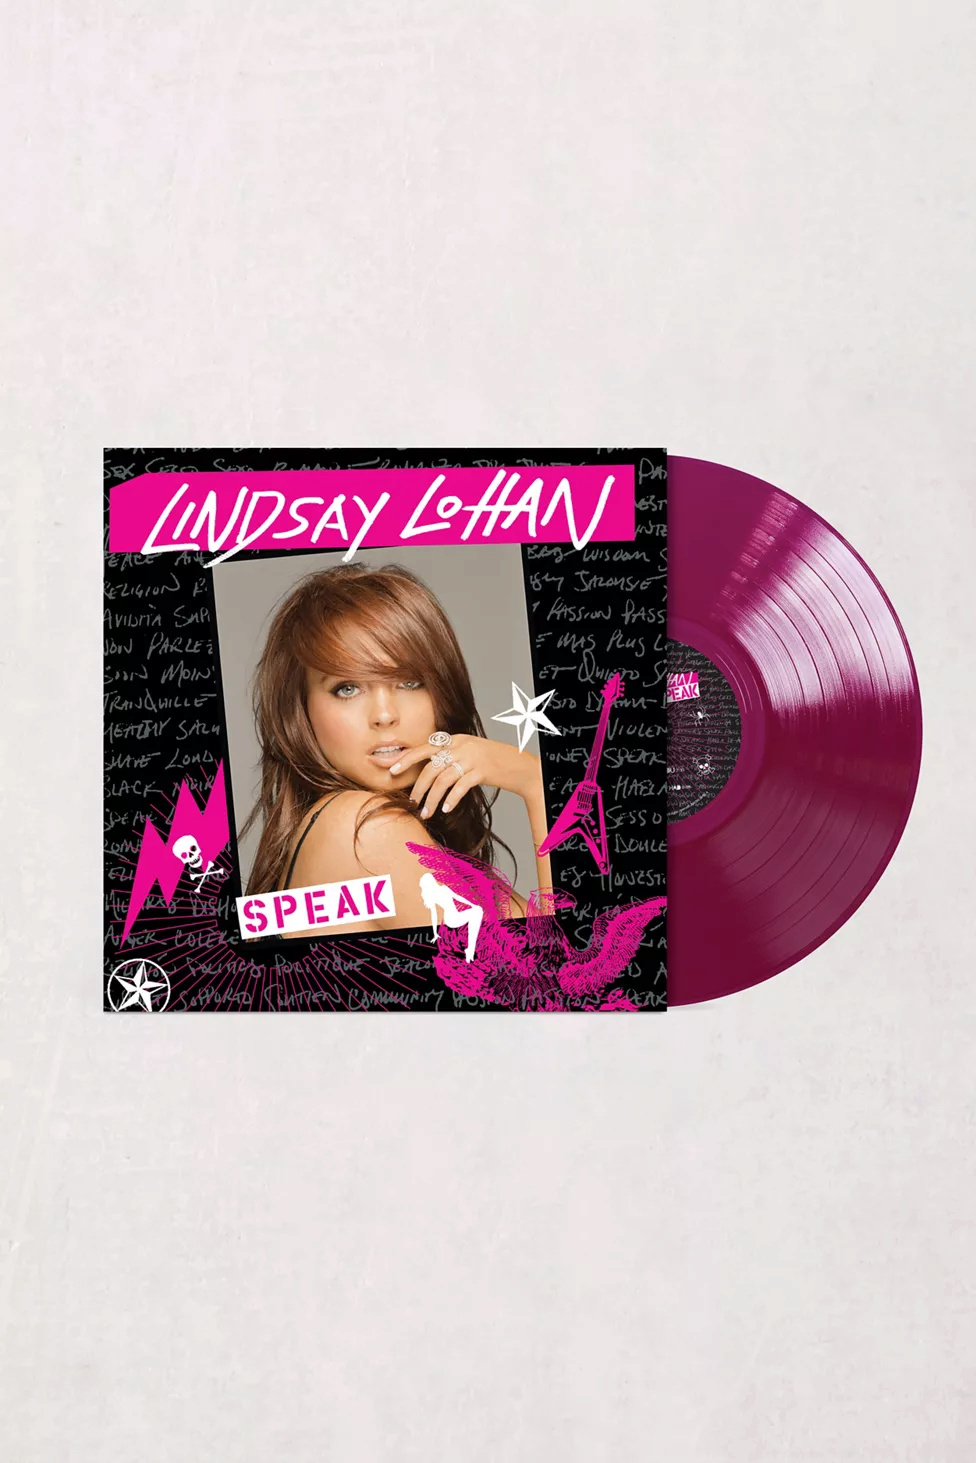 Lindsay Lohan >> single "Xanax" - Página 4 58821110